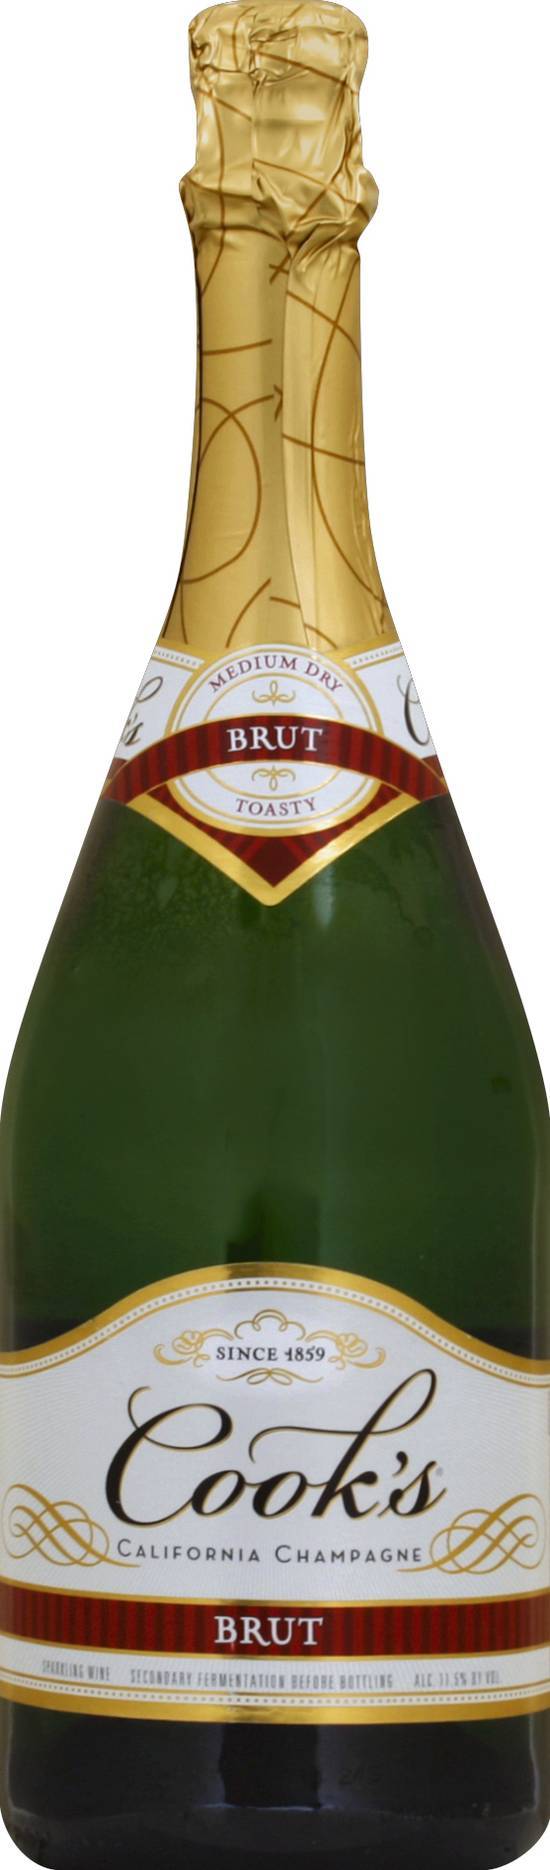 Cook's Brut California Champagne Wine 2015 (750 ml)